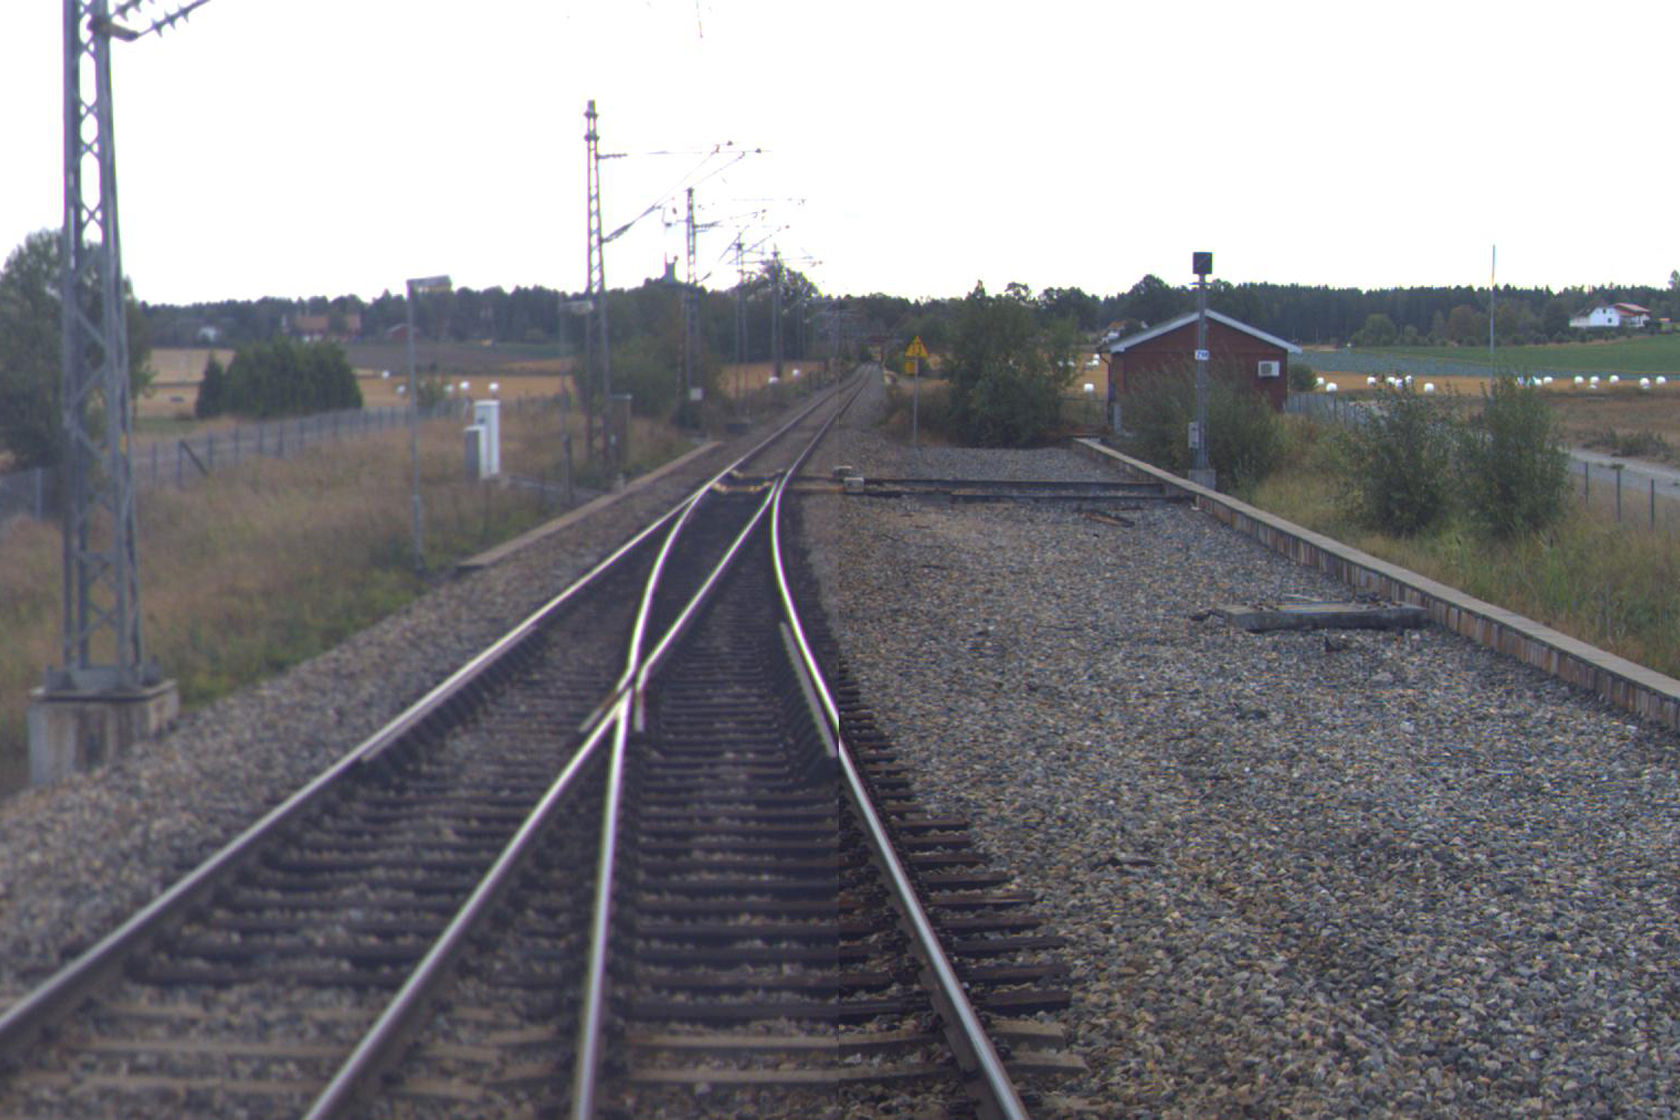 Tracks and building Haug station